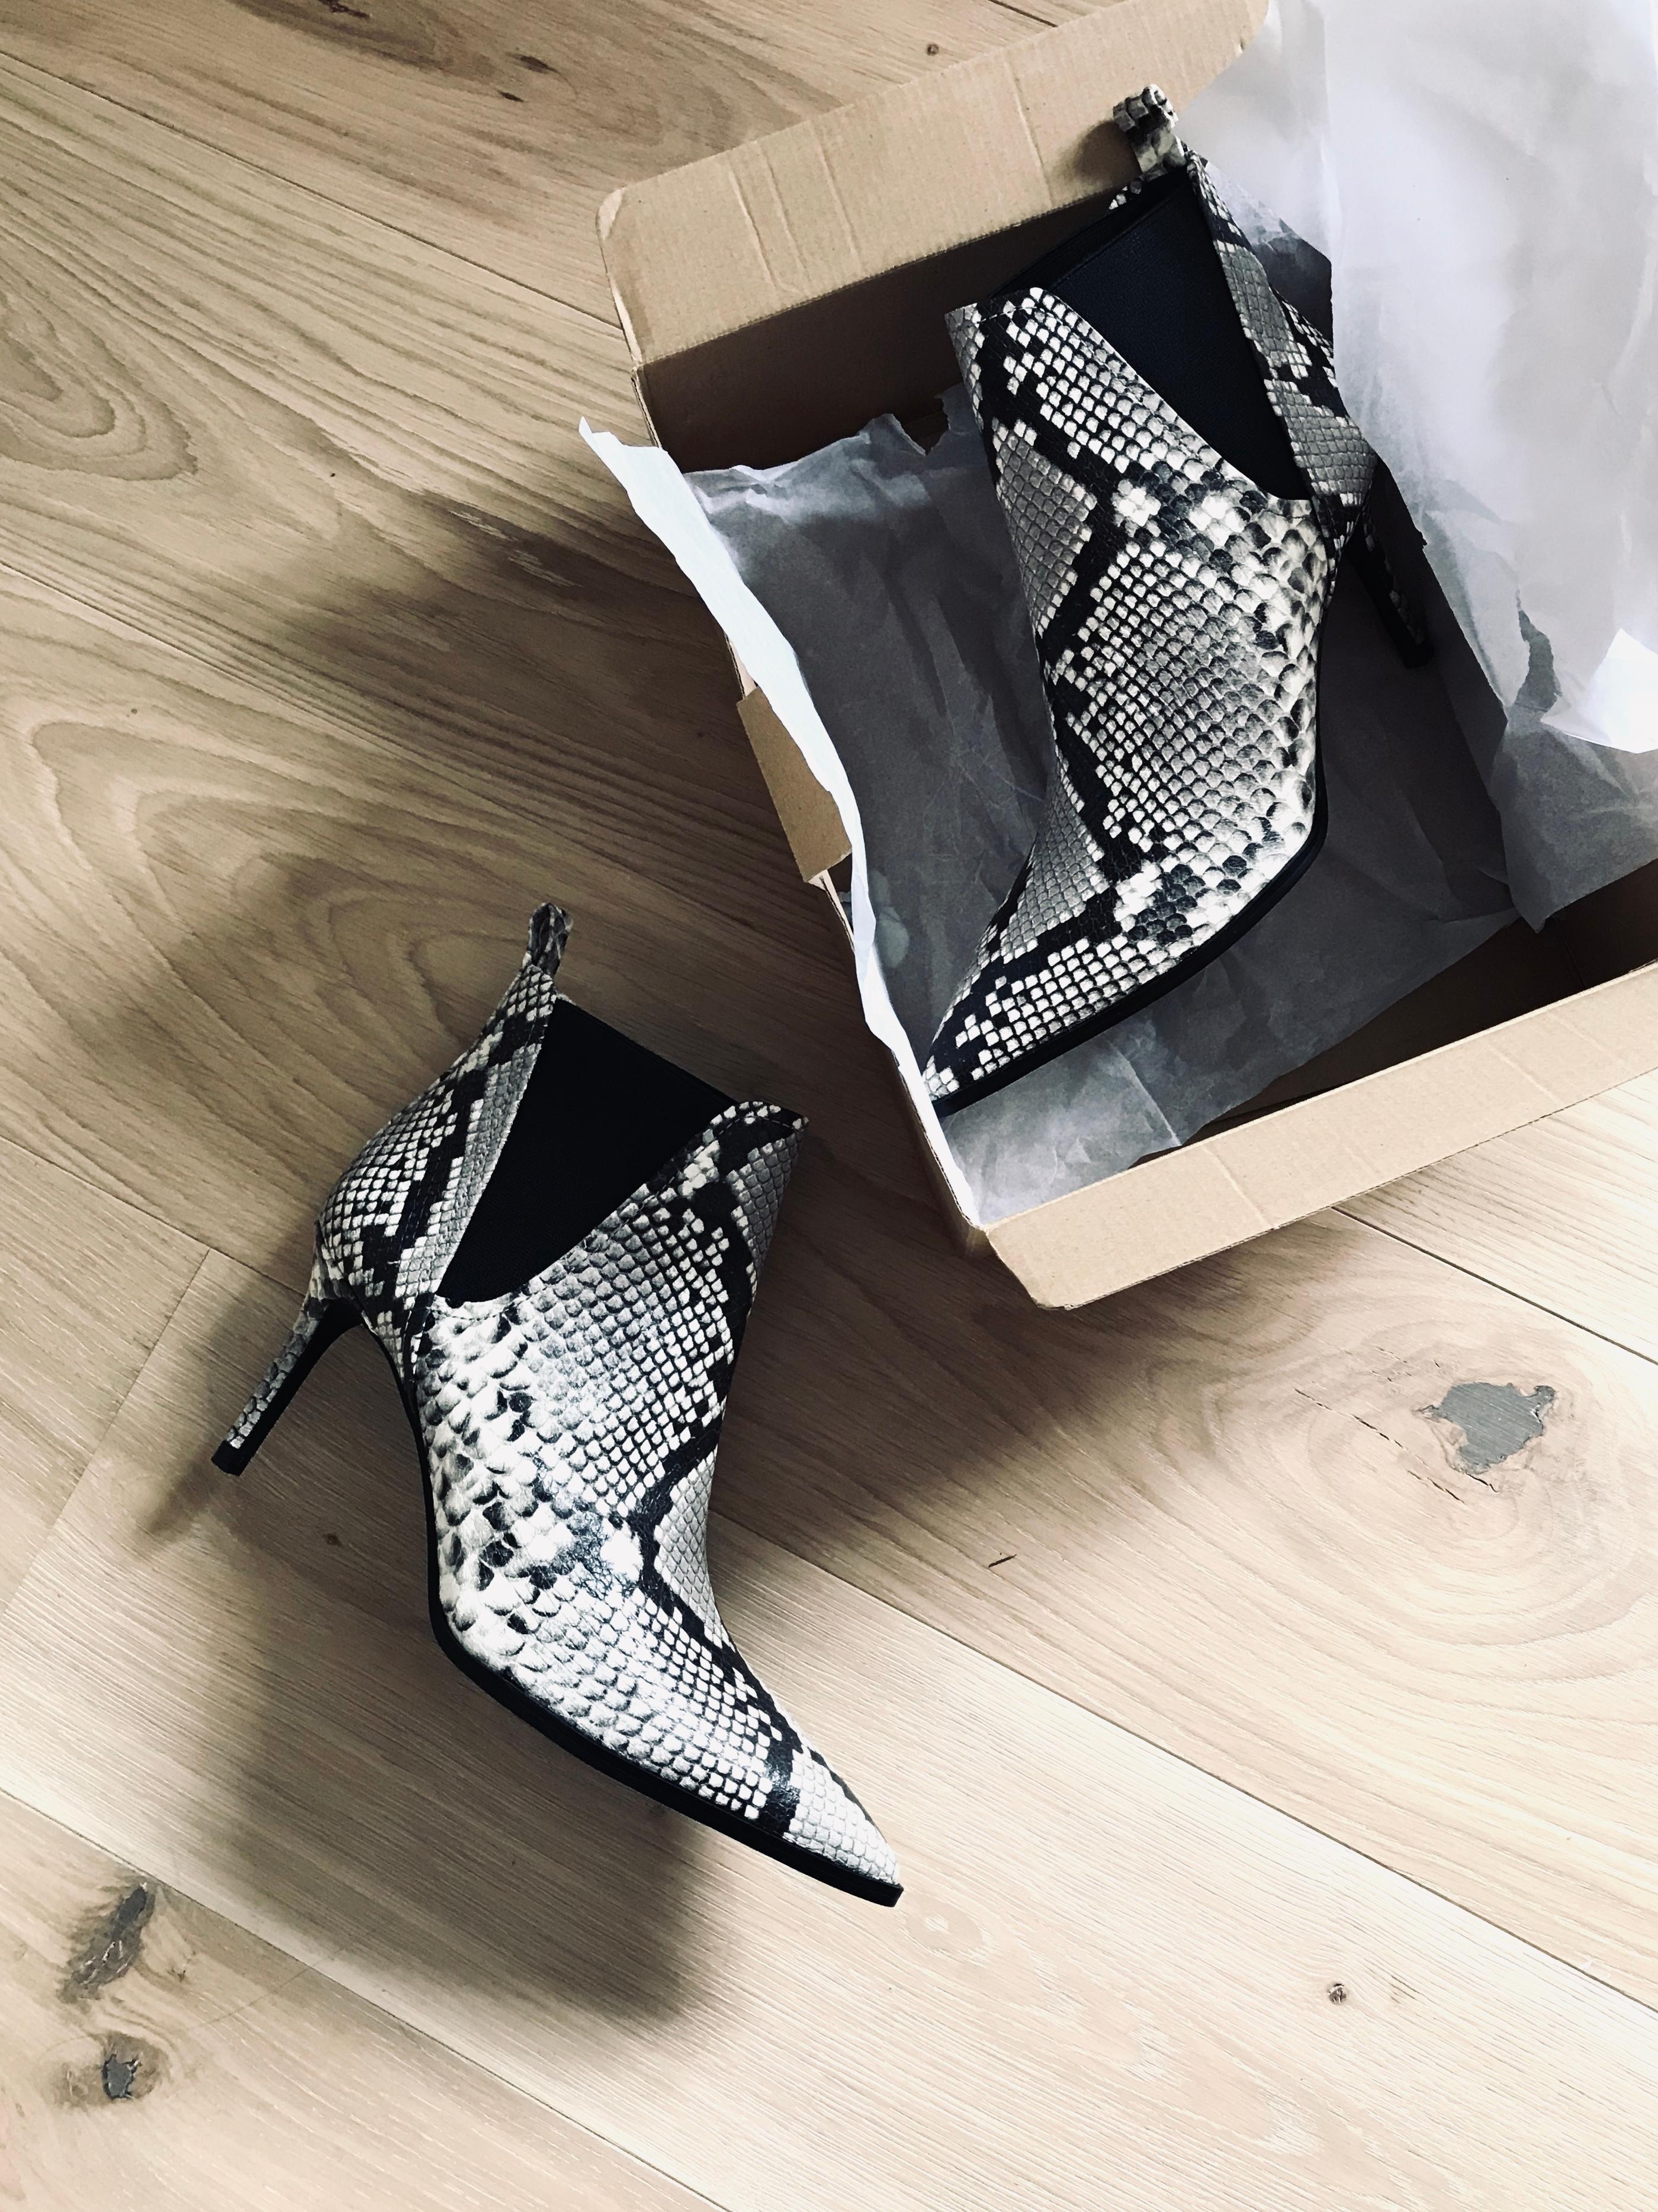 Shoe love is true love. 🖤
#boots #schuhe #stiefeletten #shoelove #schlangenprint #fashion #trend #snakeprint